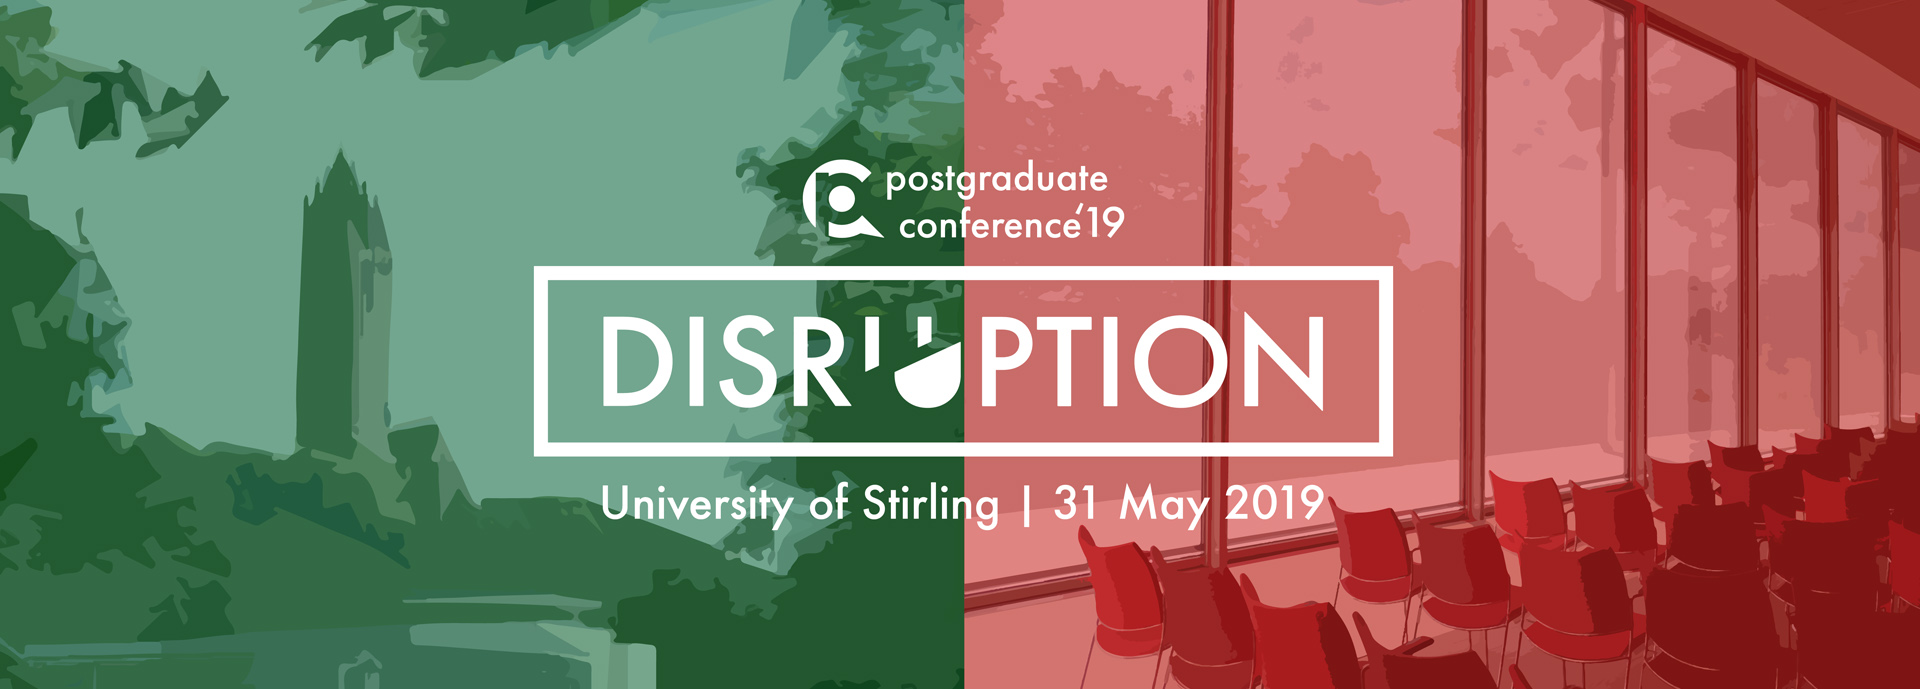 postgraduate conference banner